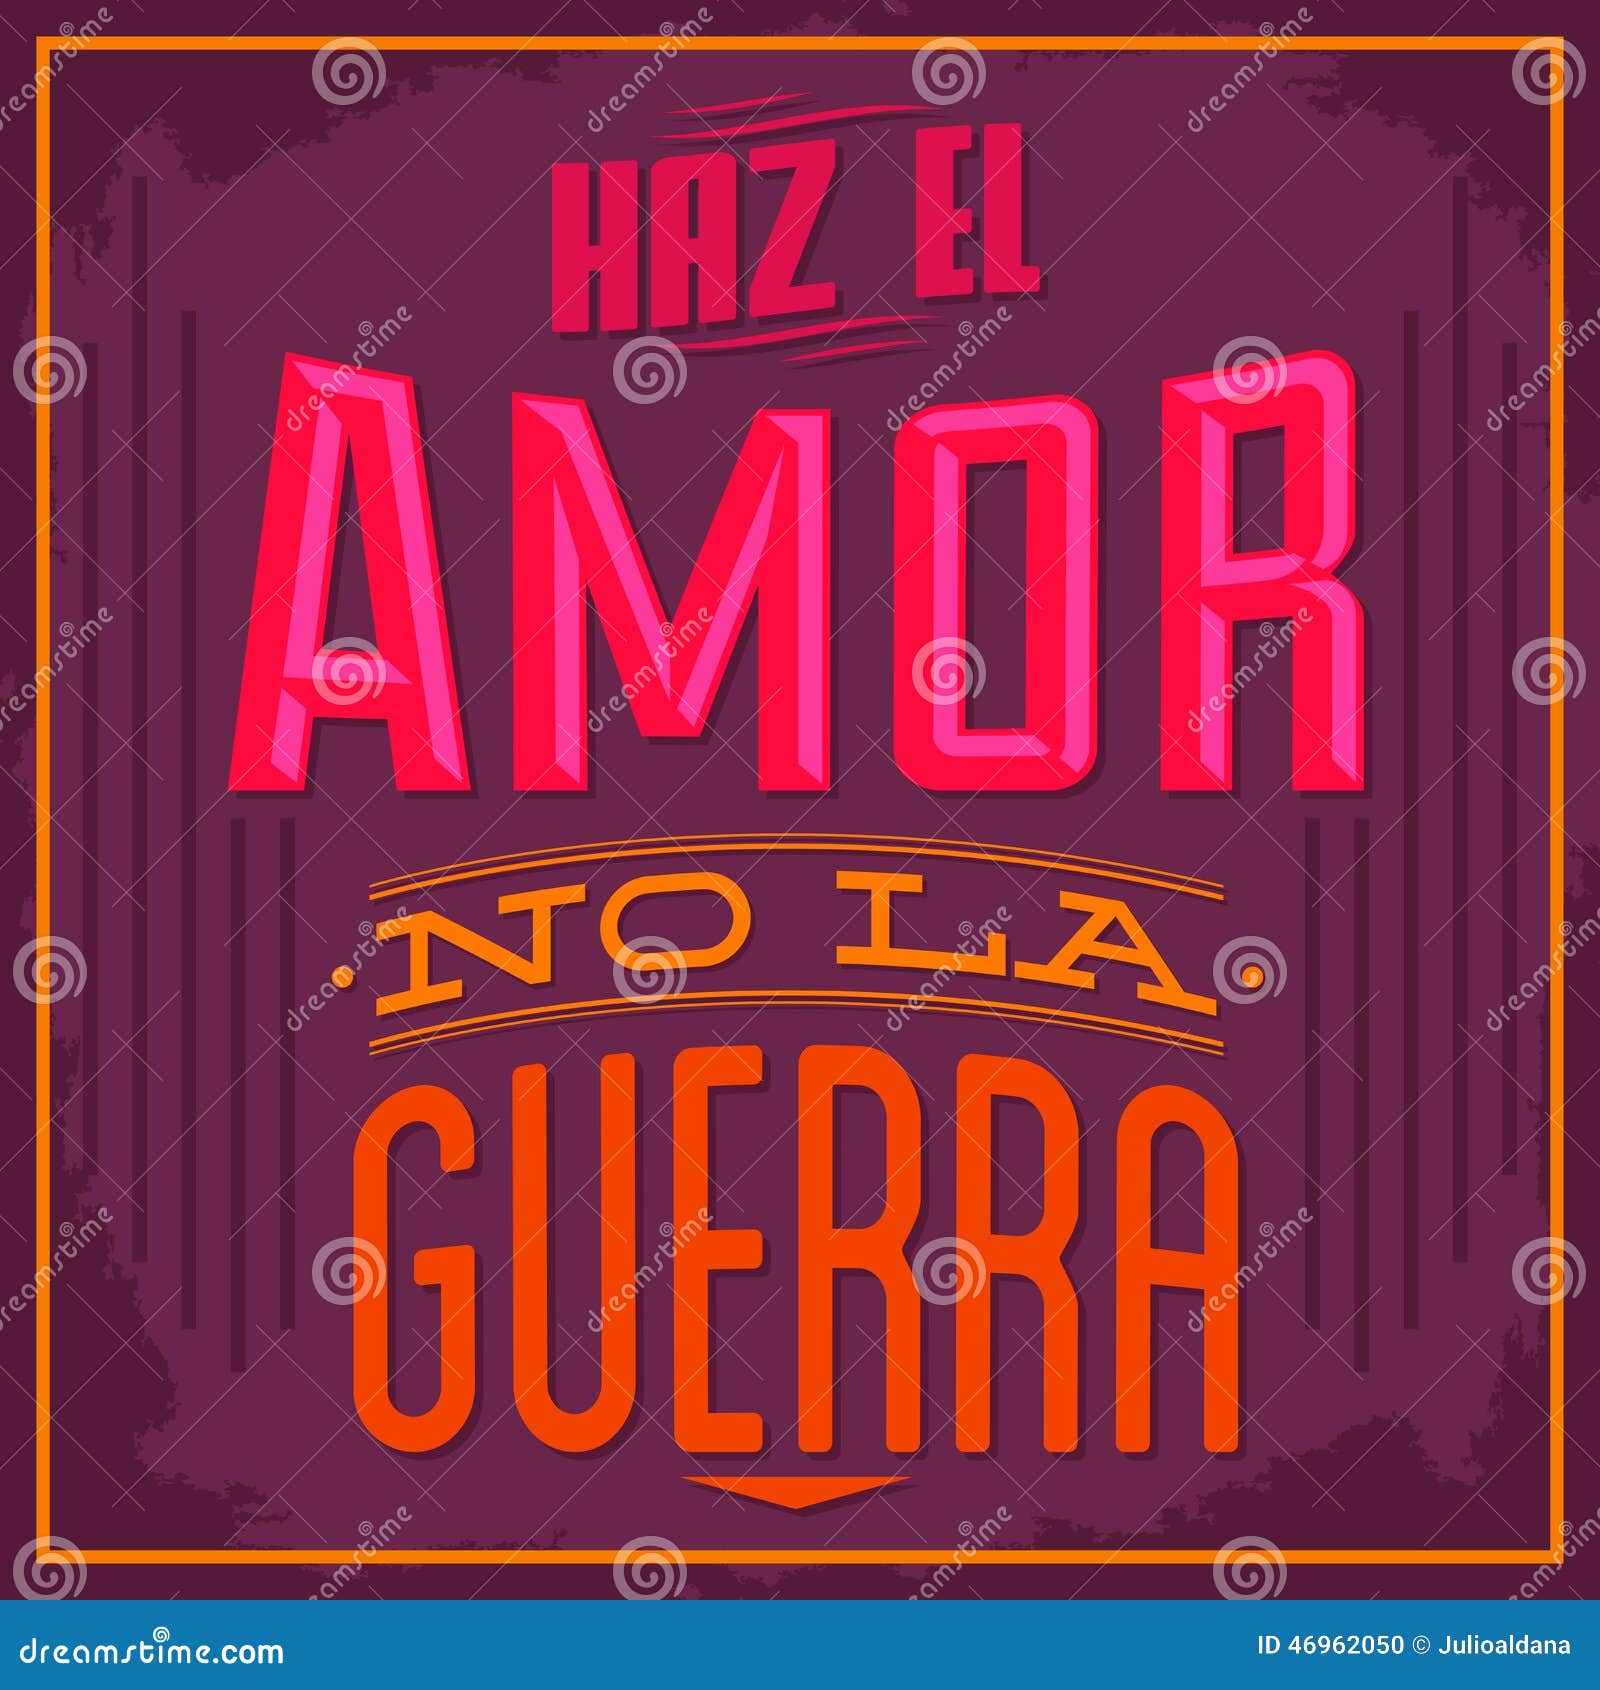 haz el amor no la guerra - make love nor war spanish text